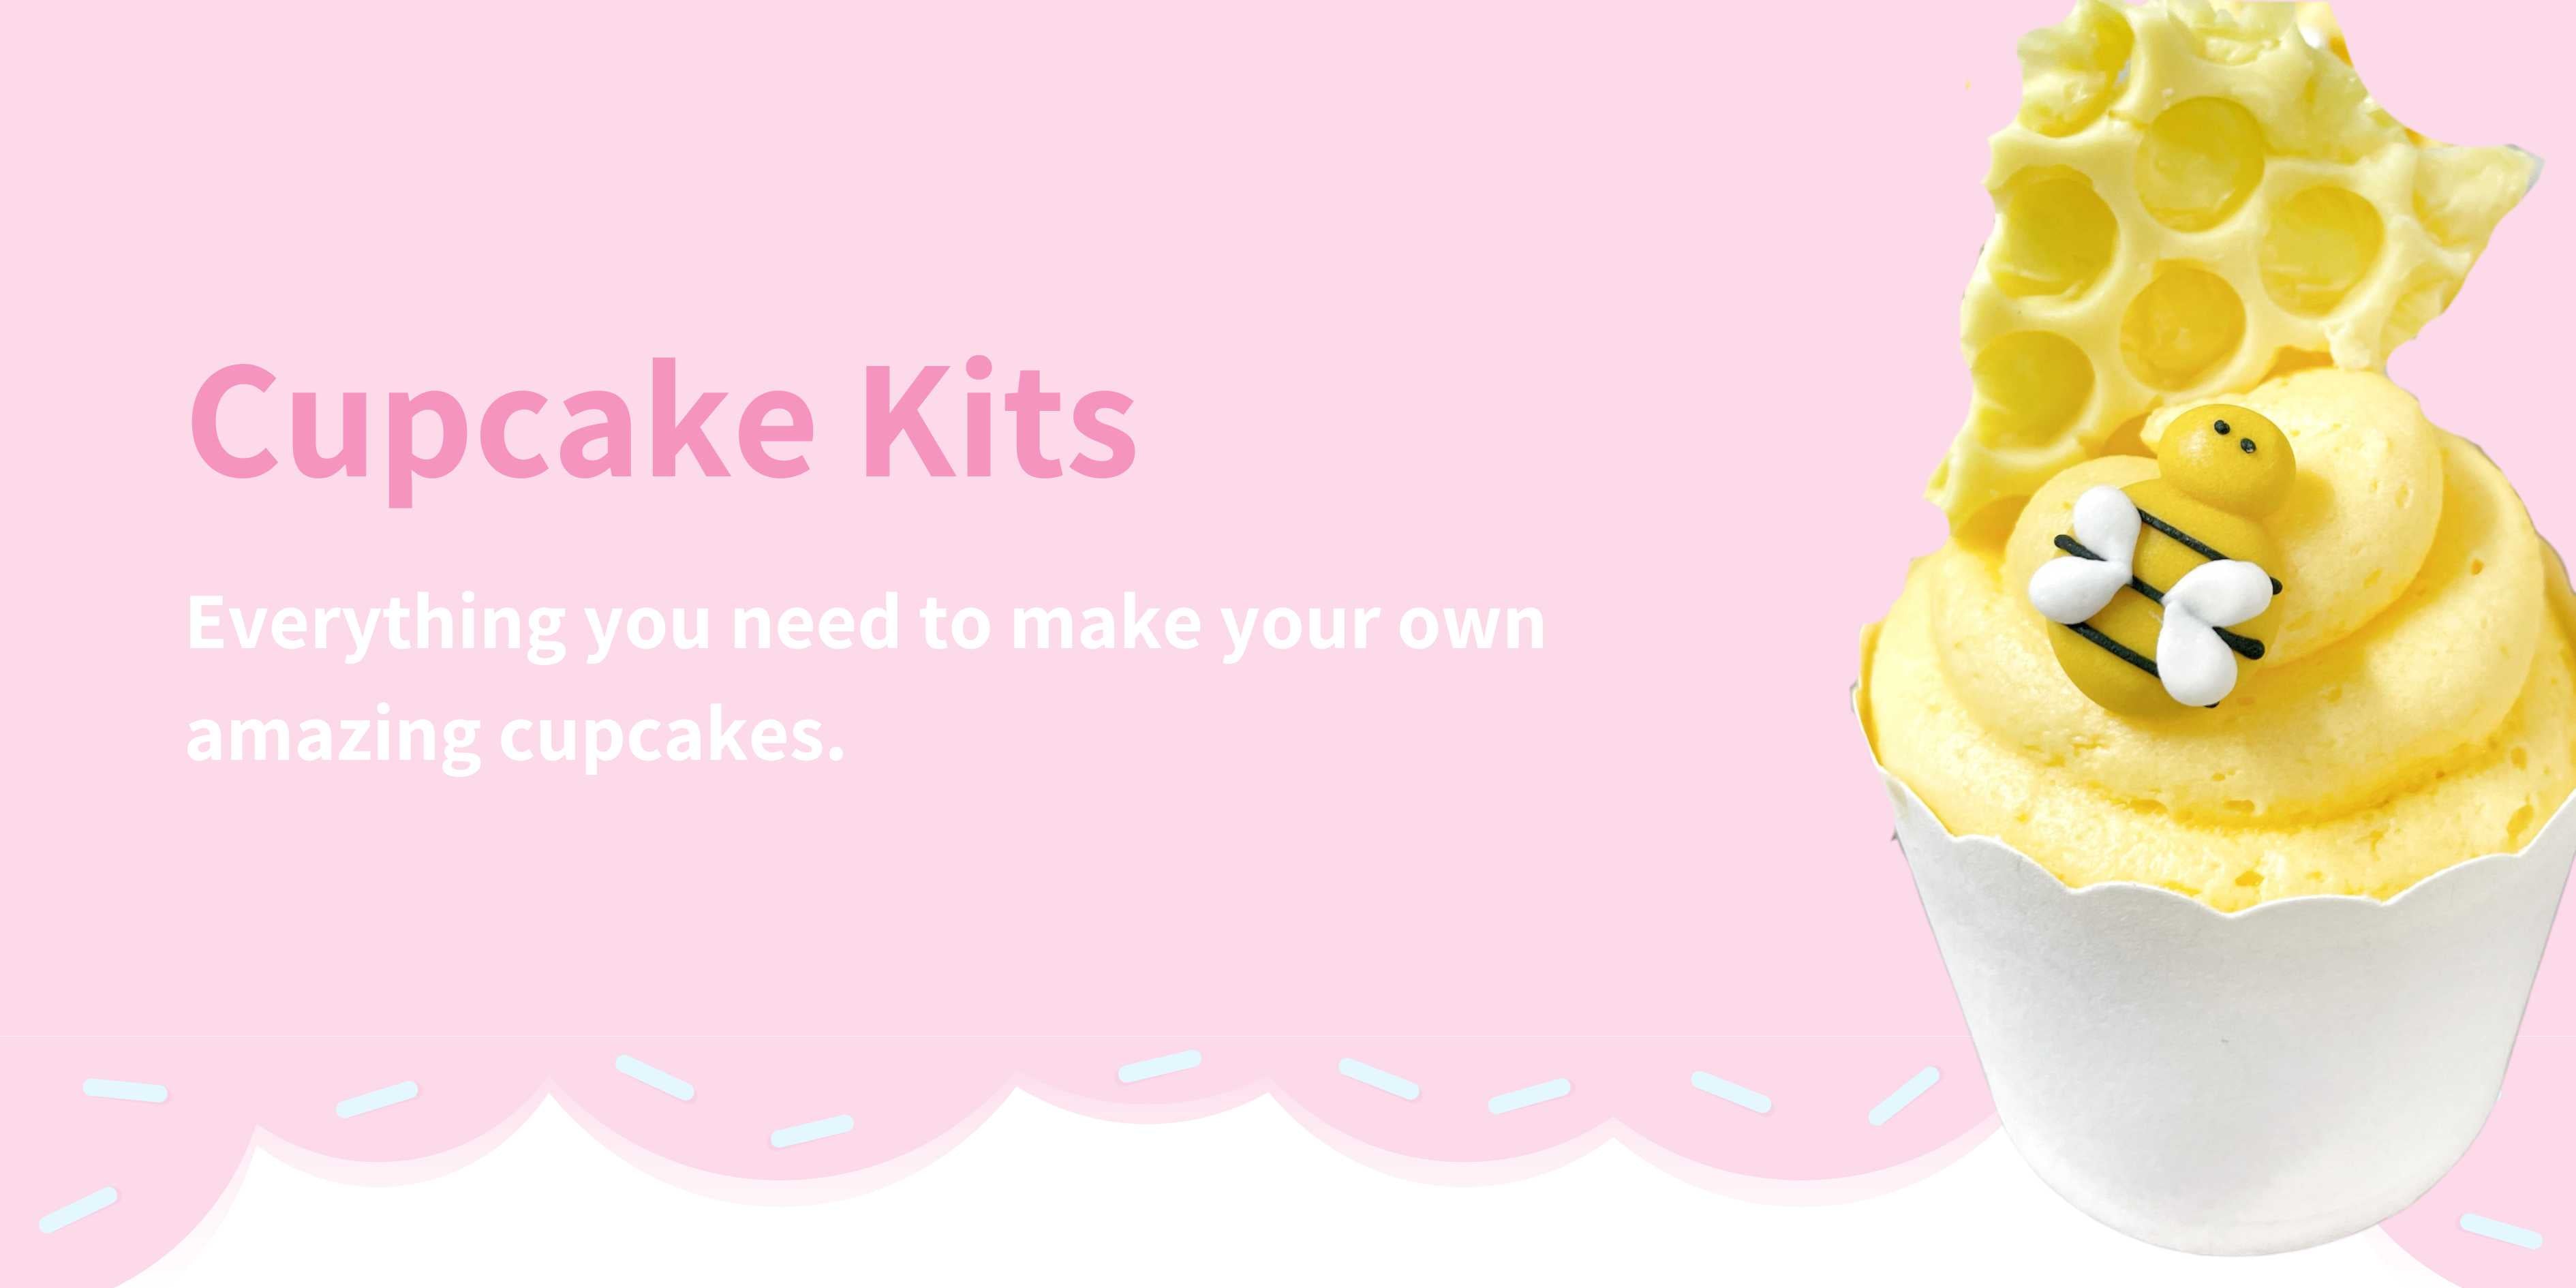 DIY Cupcake Kits, Cupcake Kit, Homemade Cupcakes, Make Cupcakes At Home.